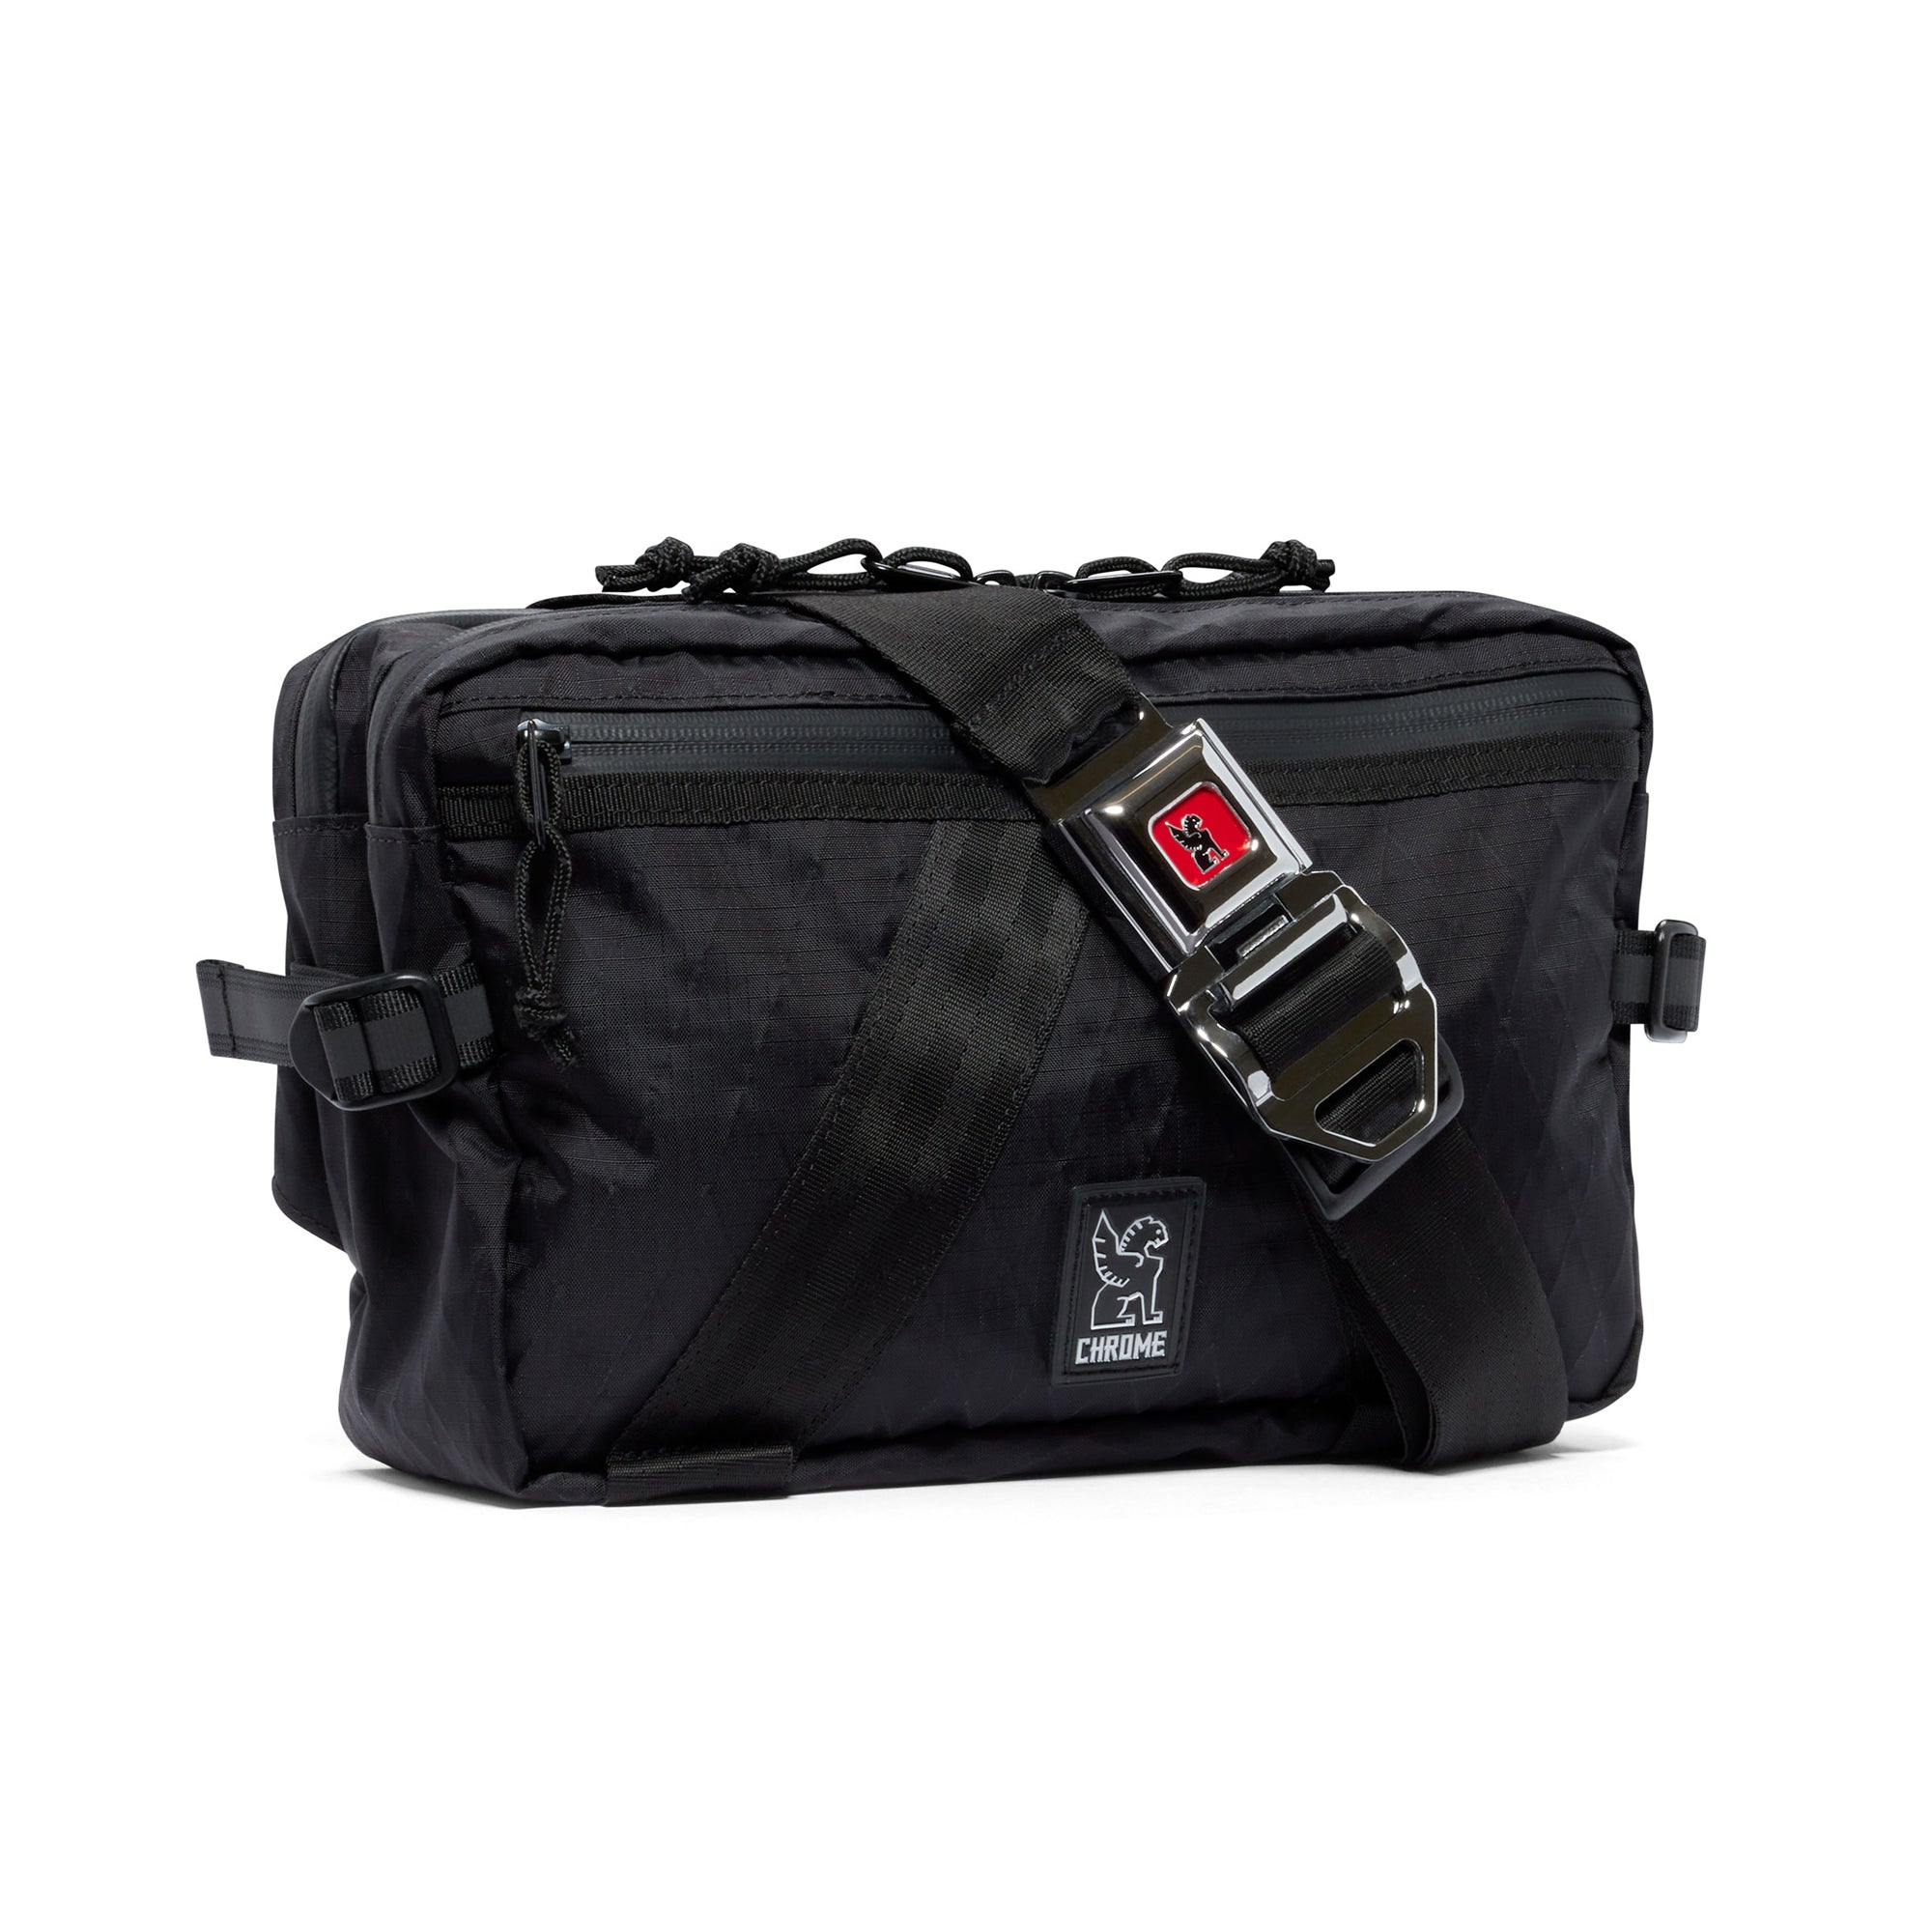 Buy Black Utility Bags for Men by K LONDON Online